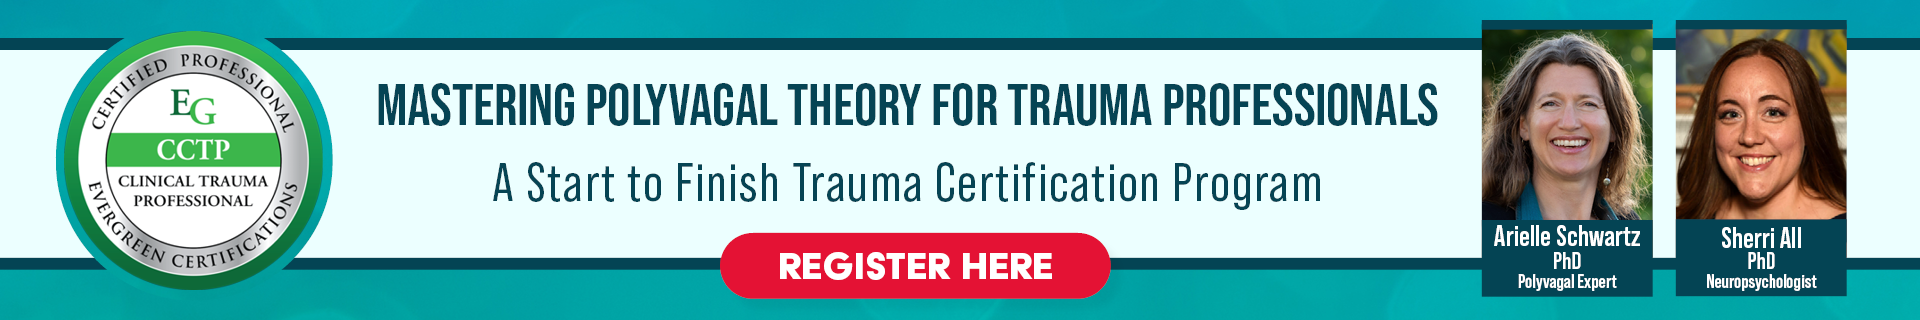 Mastering Polyvagal Theory for Trauma Professionals